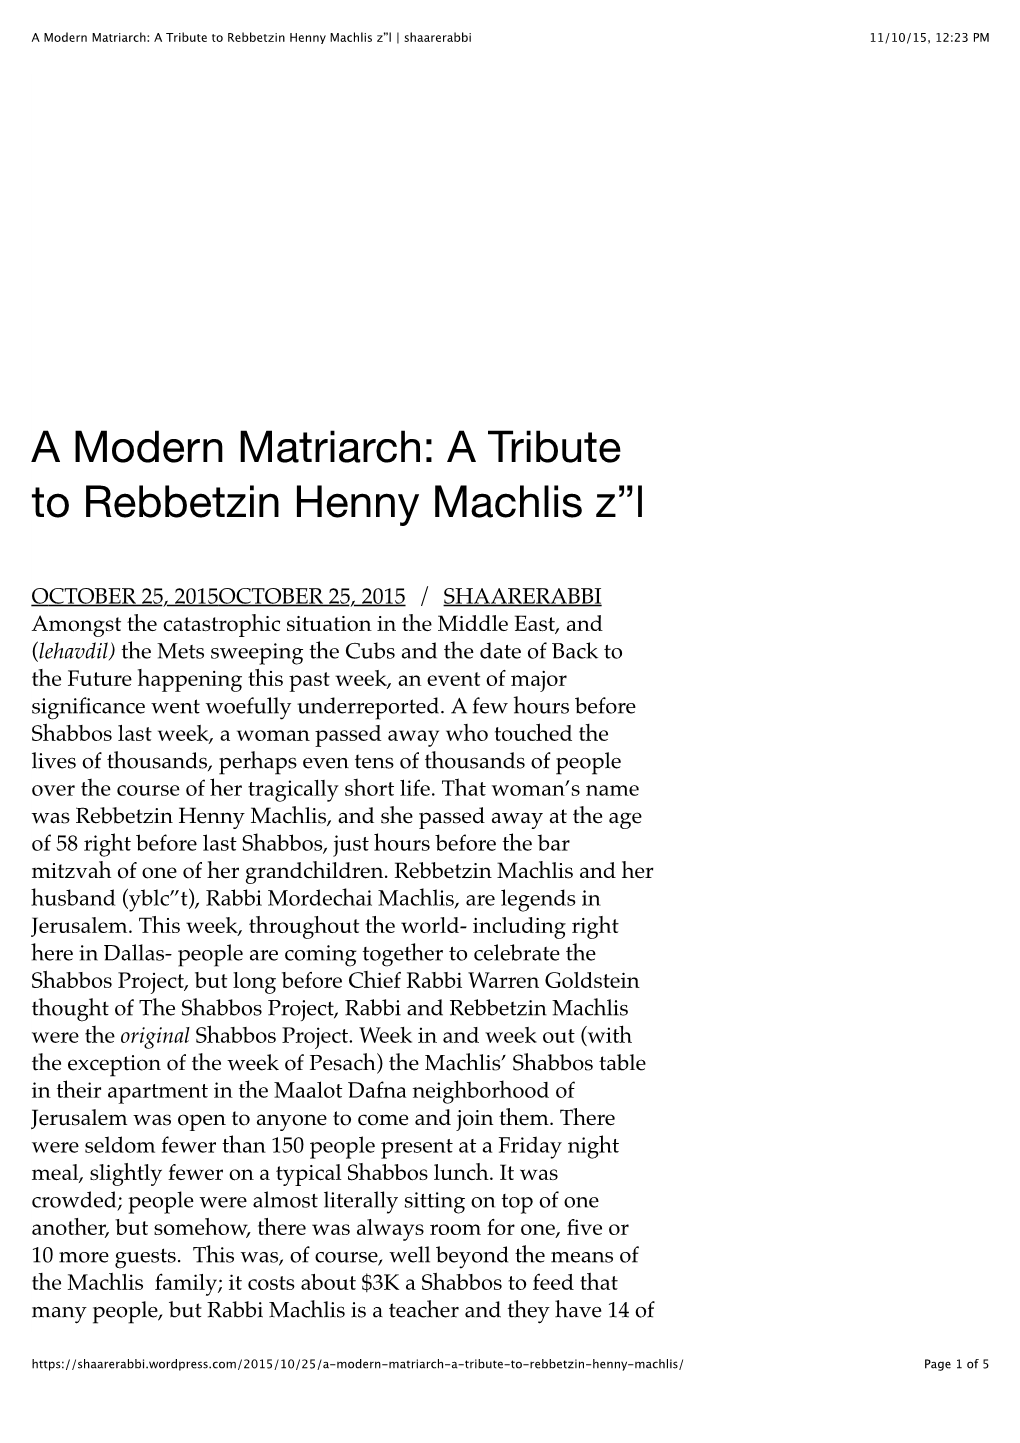 A Modern Matriarch: a Tribute to Rebbetzin Henny Machlis Z”L | Shaarerabbi 11/10/15, 12:23 PM